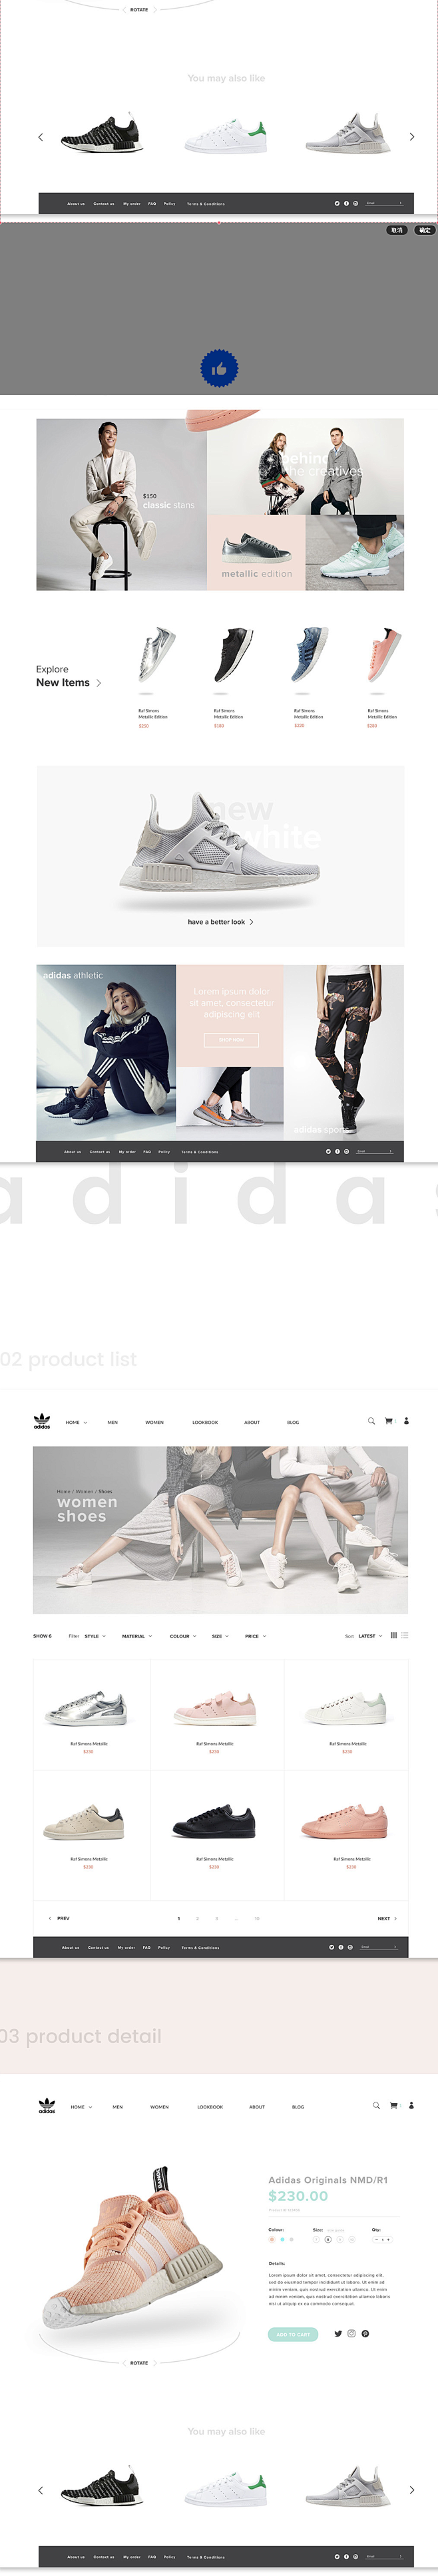 Web Design for Adida...